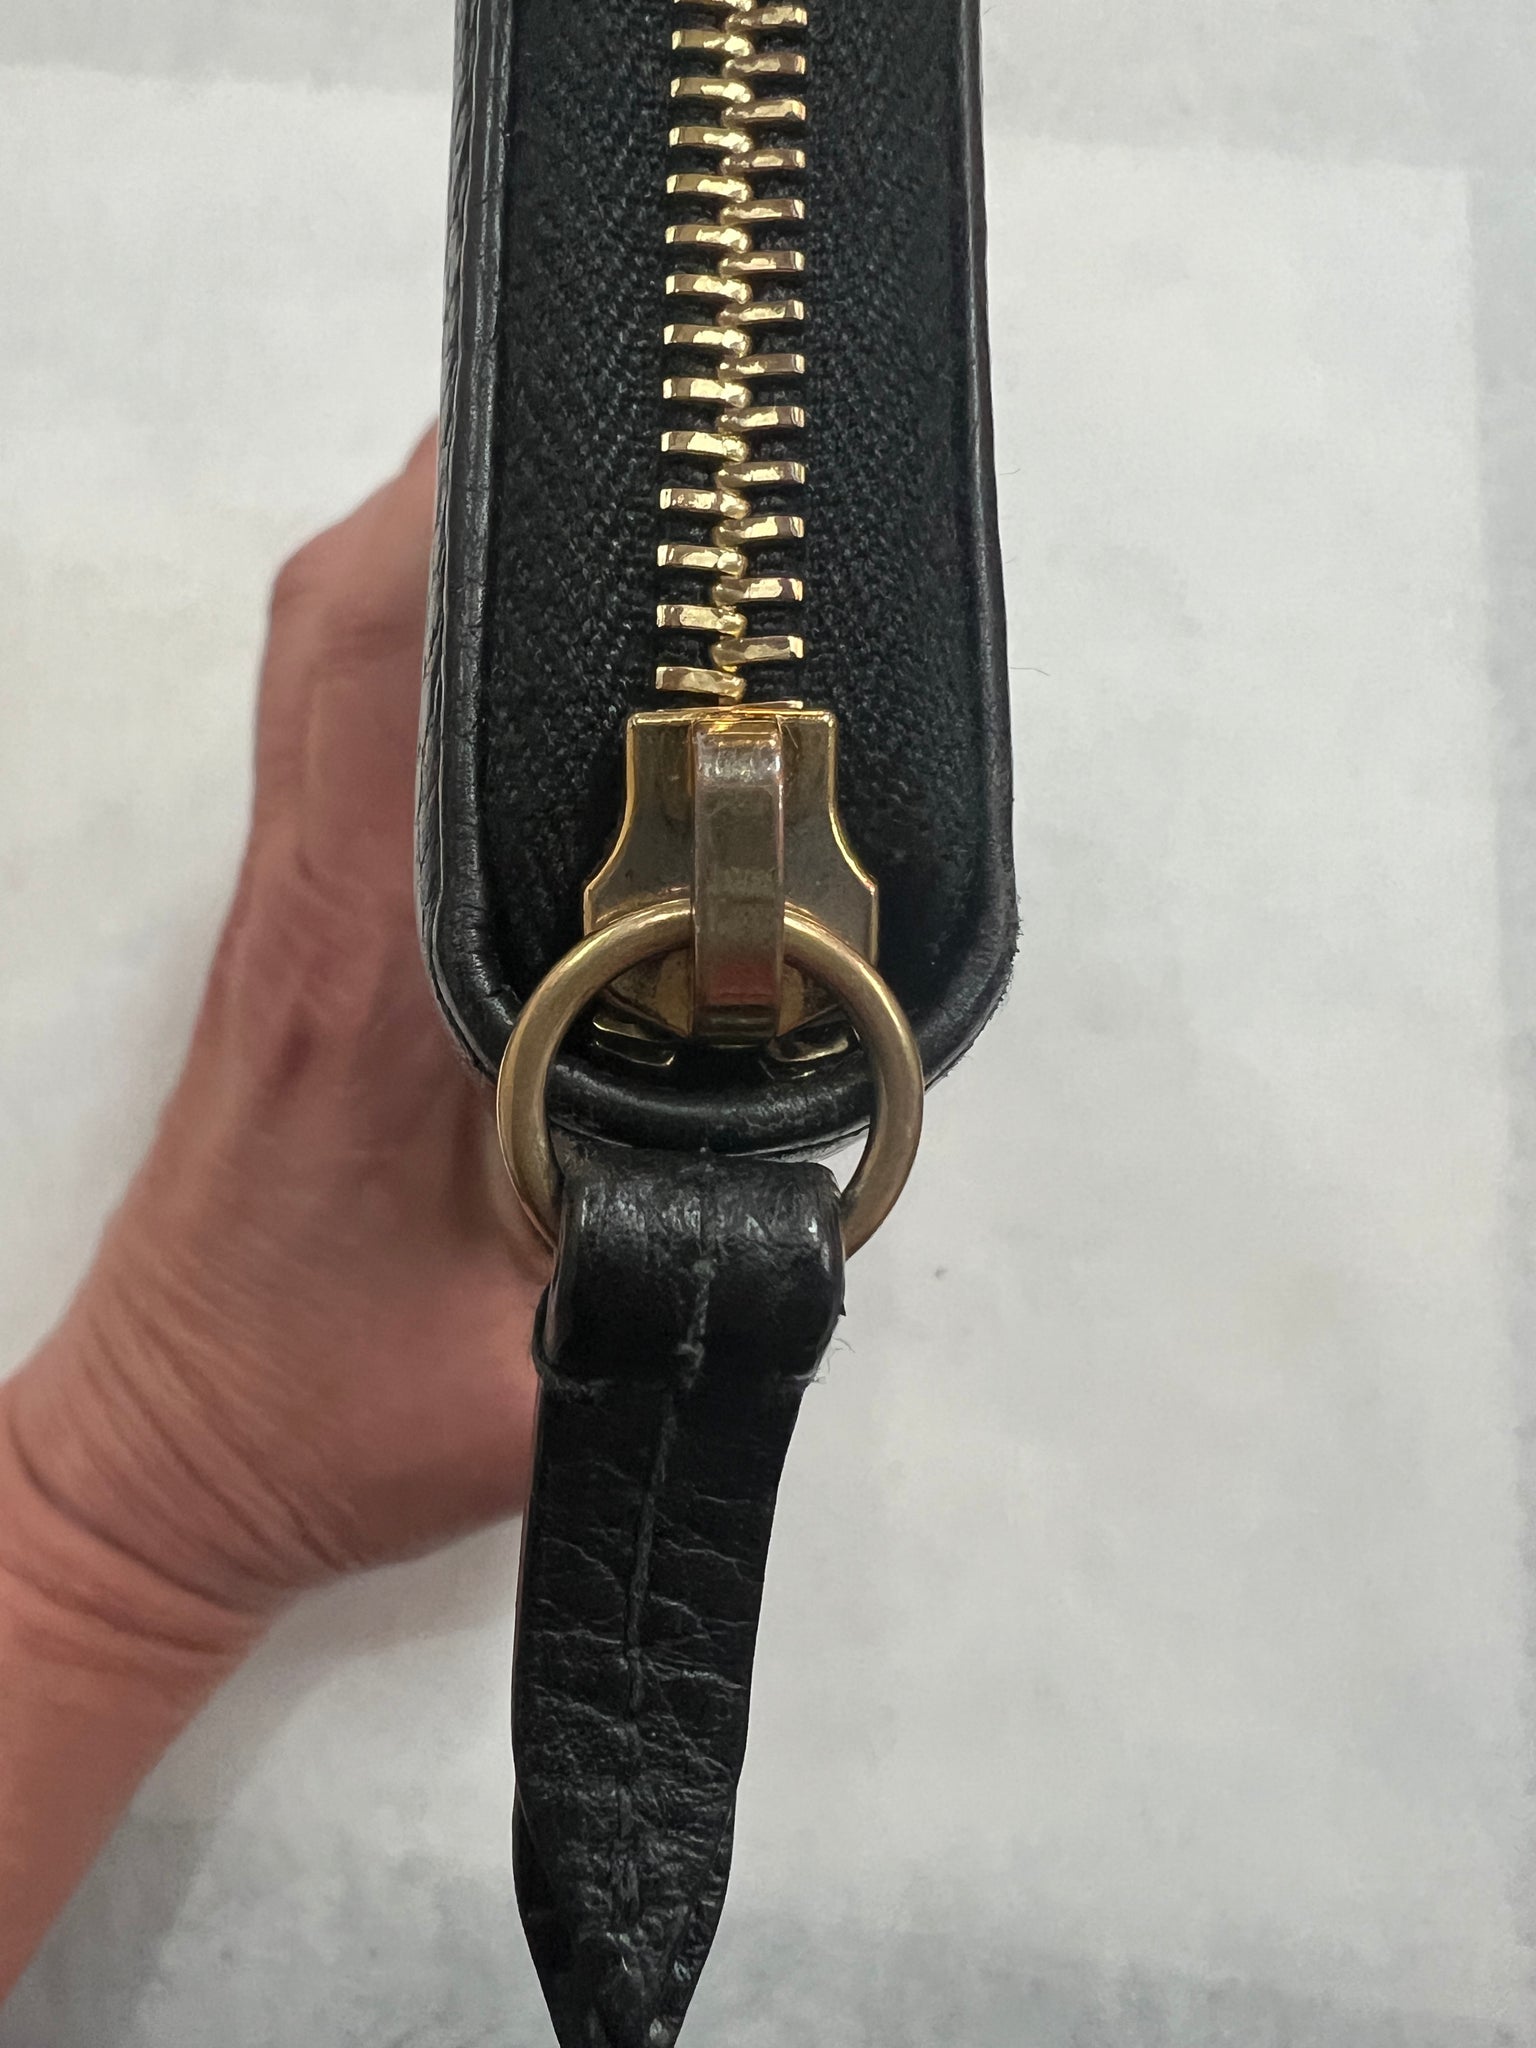 Authentic Gucci Black Leather Zip Around Wallet – Relics to Rhinestones